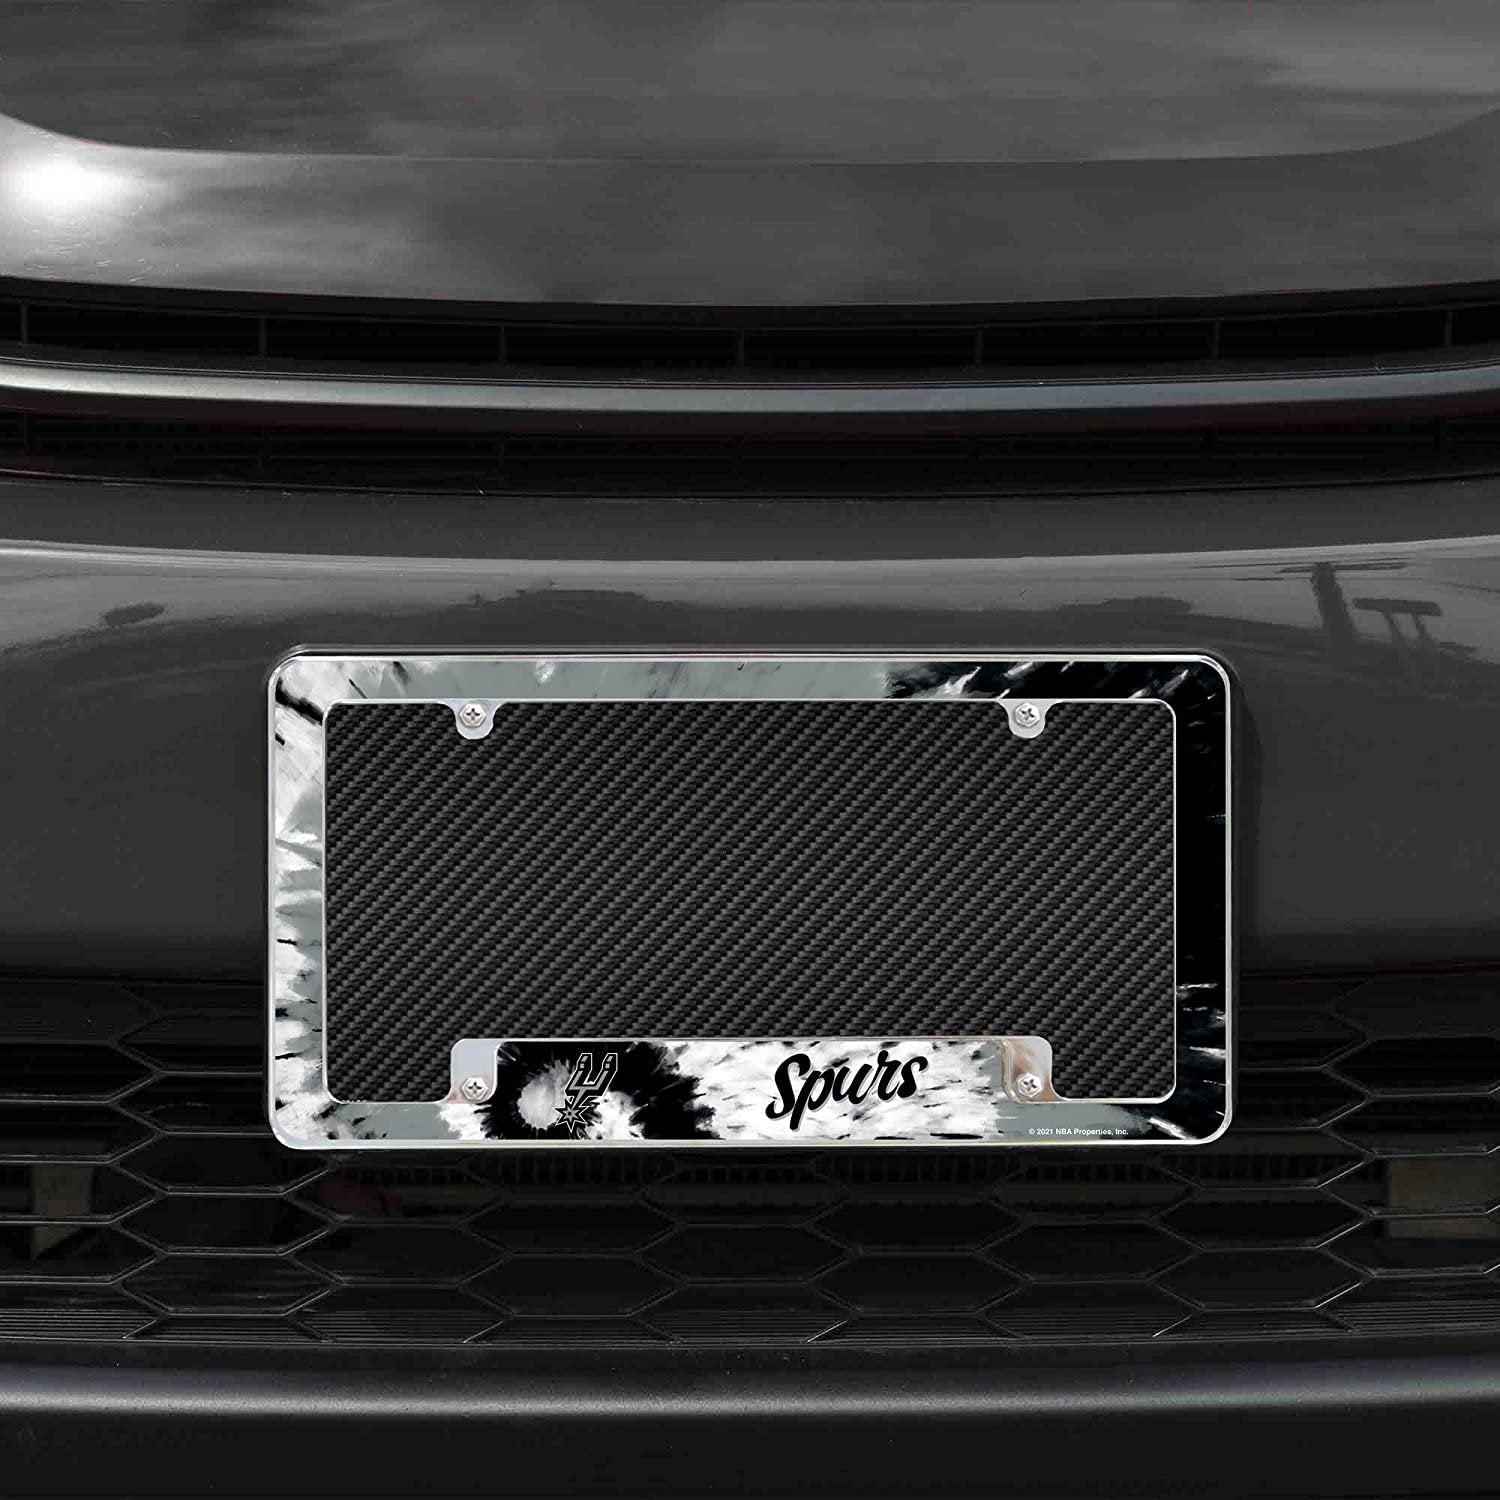 San Antonio Spurs Metal License Plate Frame Chrome Tag Cover Tie Dye Design 6x12 Inch